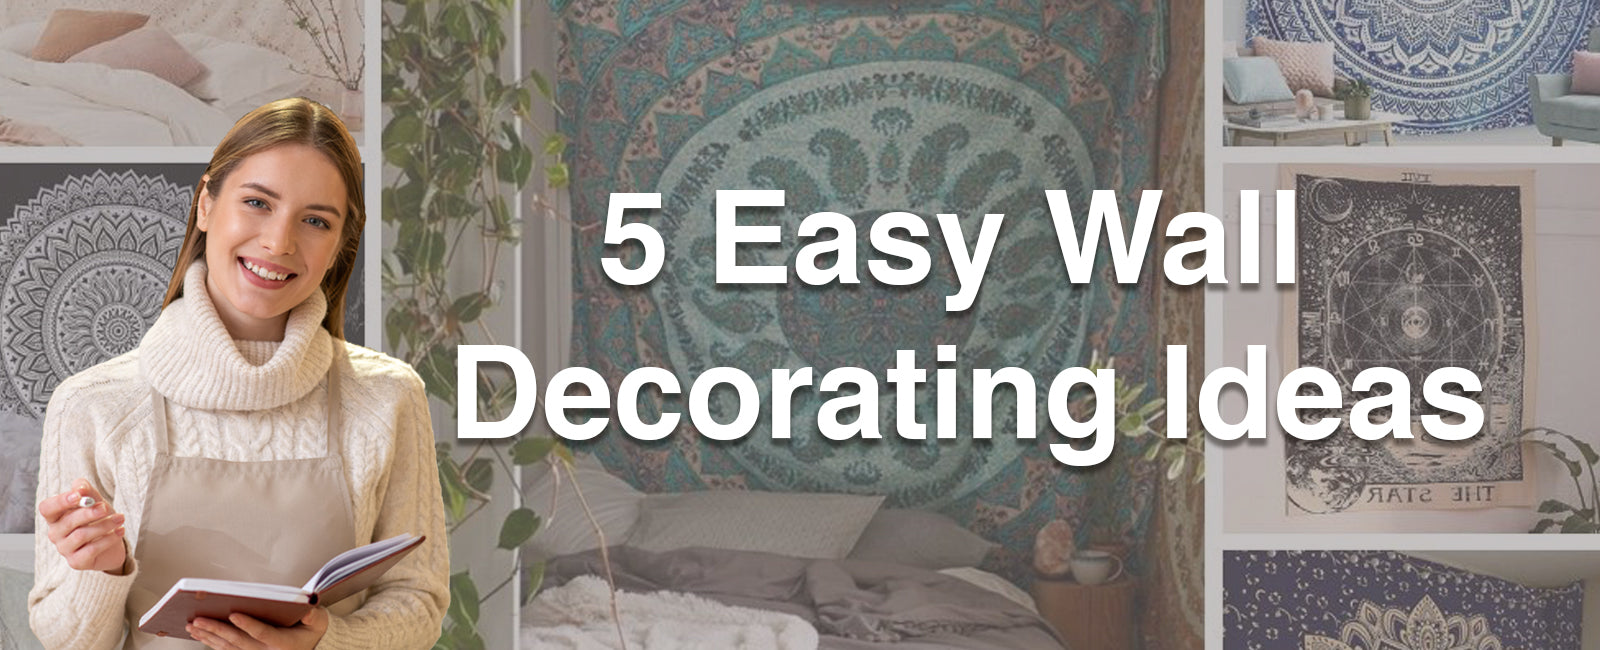 5 Easy Wall Decorating Ideas